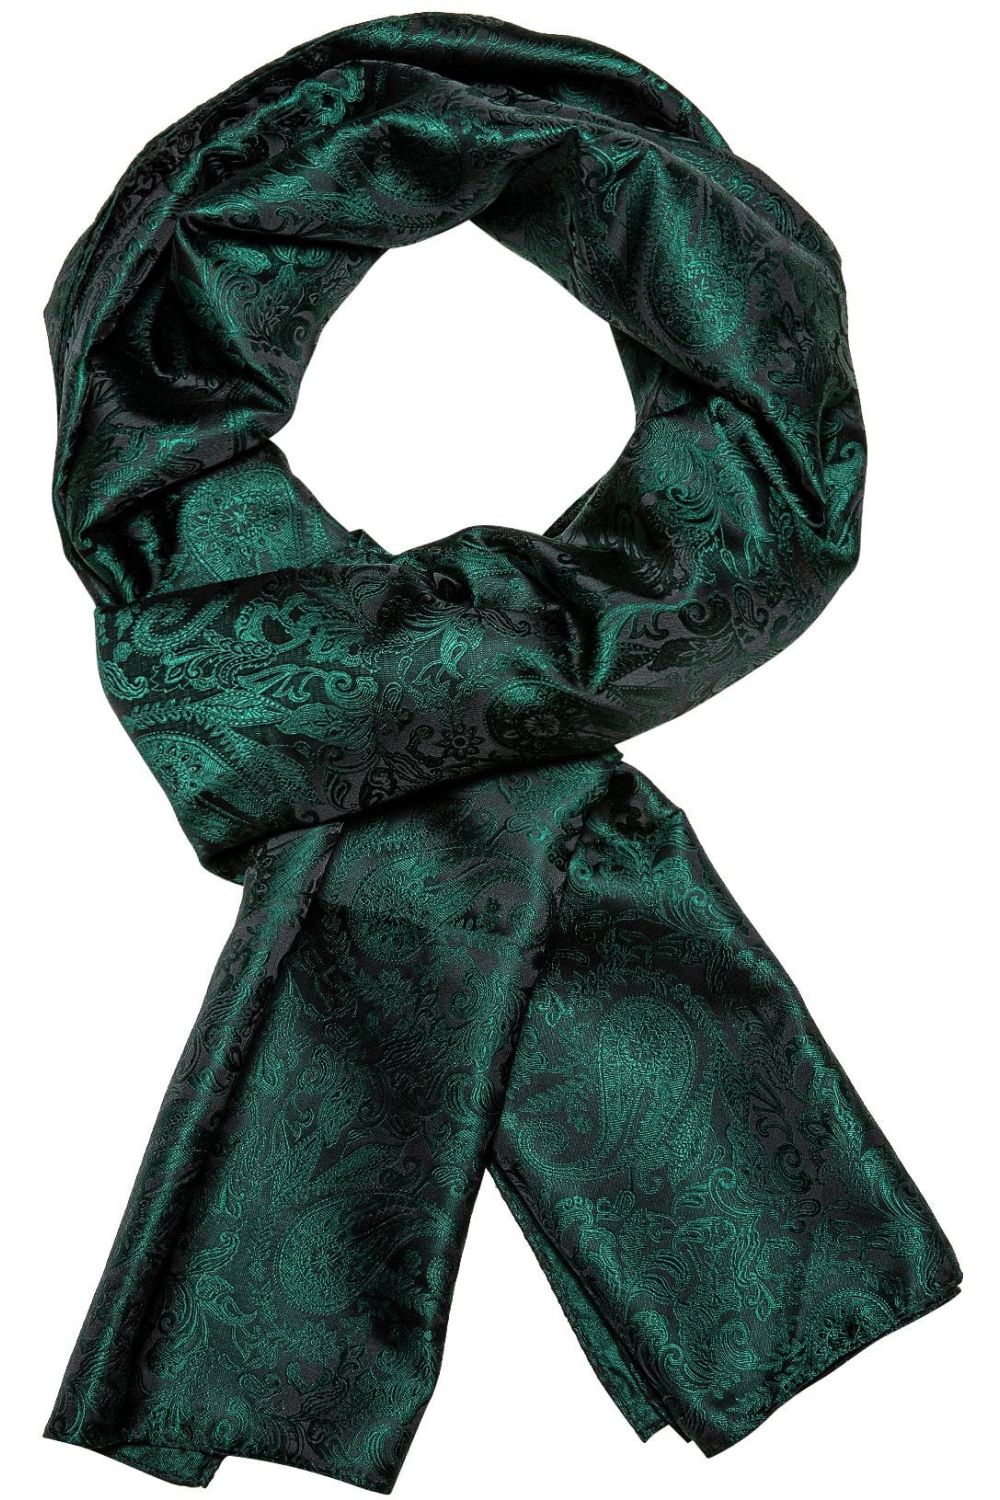 Emerald & Black Paisley Silk blend Scarf